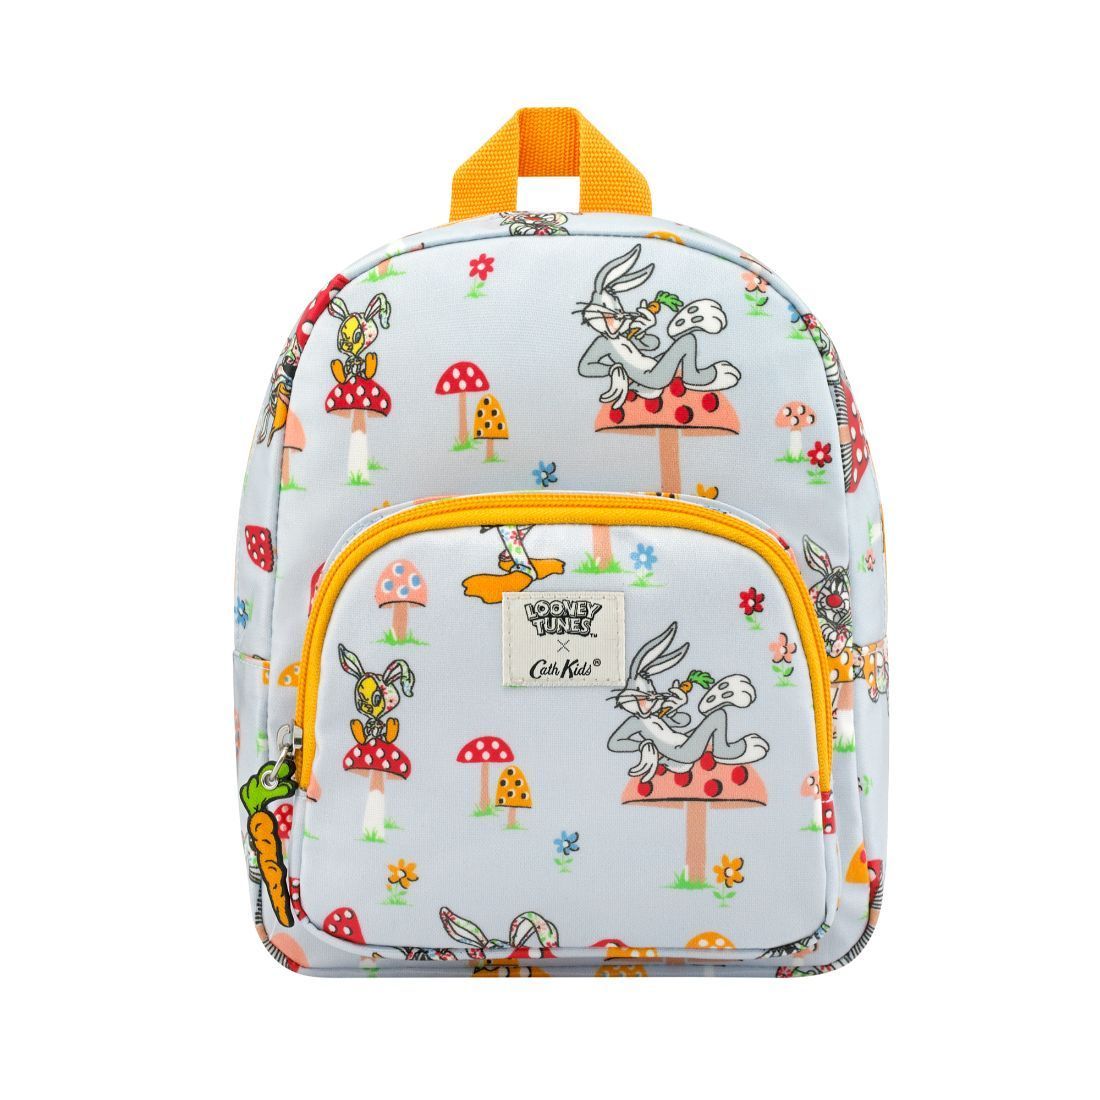  Ba lô cho bé /Kids Mini Backpack - Looney Tunes Toadstalls - 1096514 